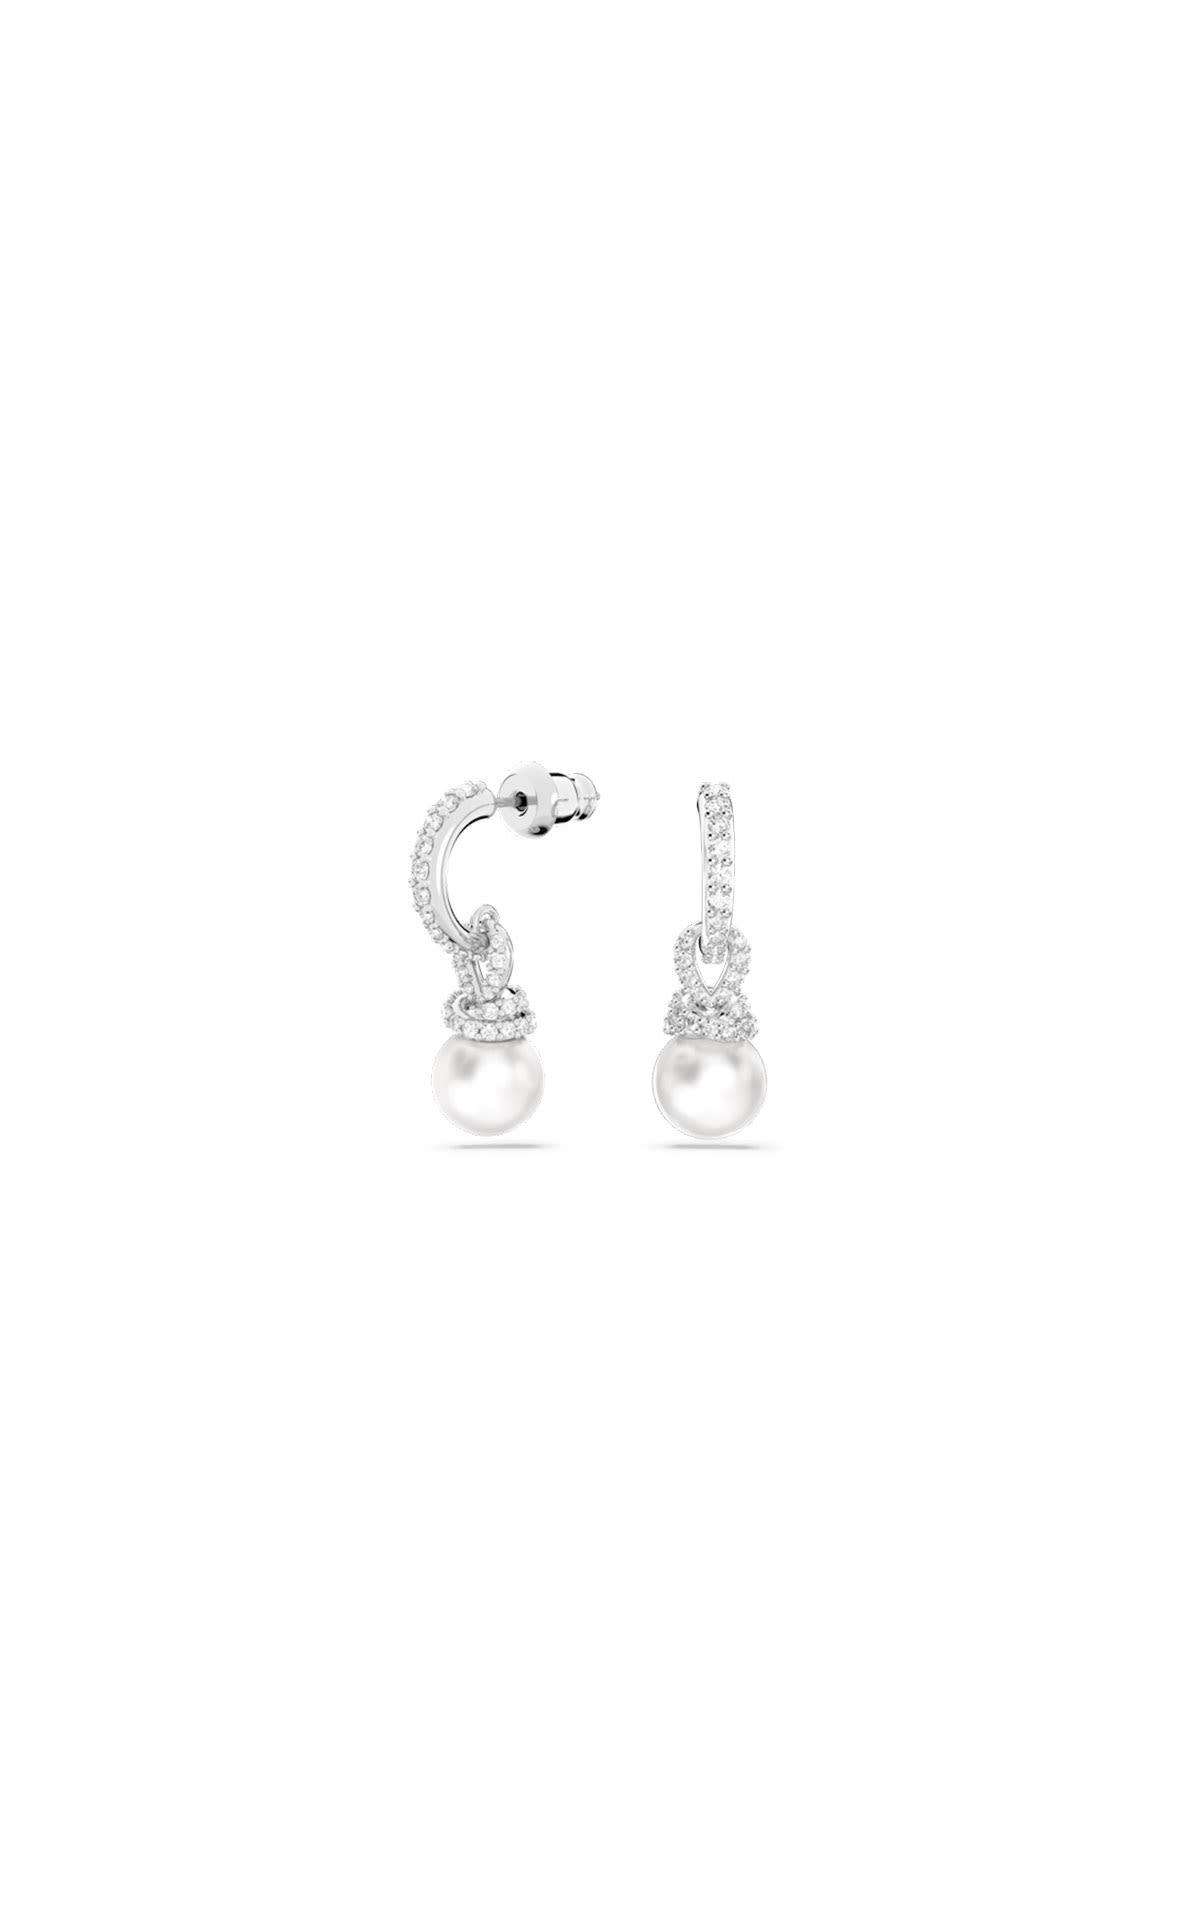 Swarovski Pearl drop earrings from Bicester Village